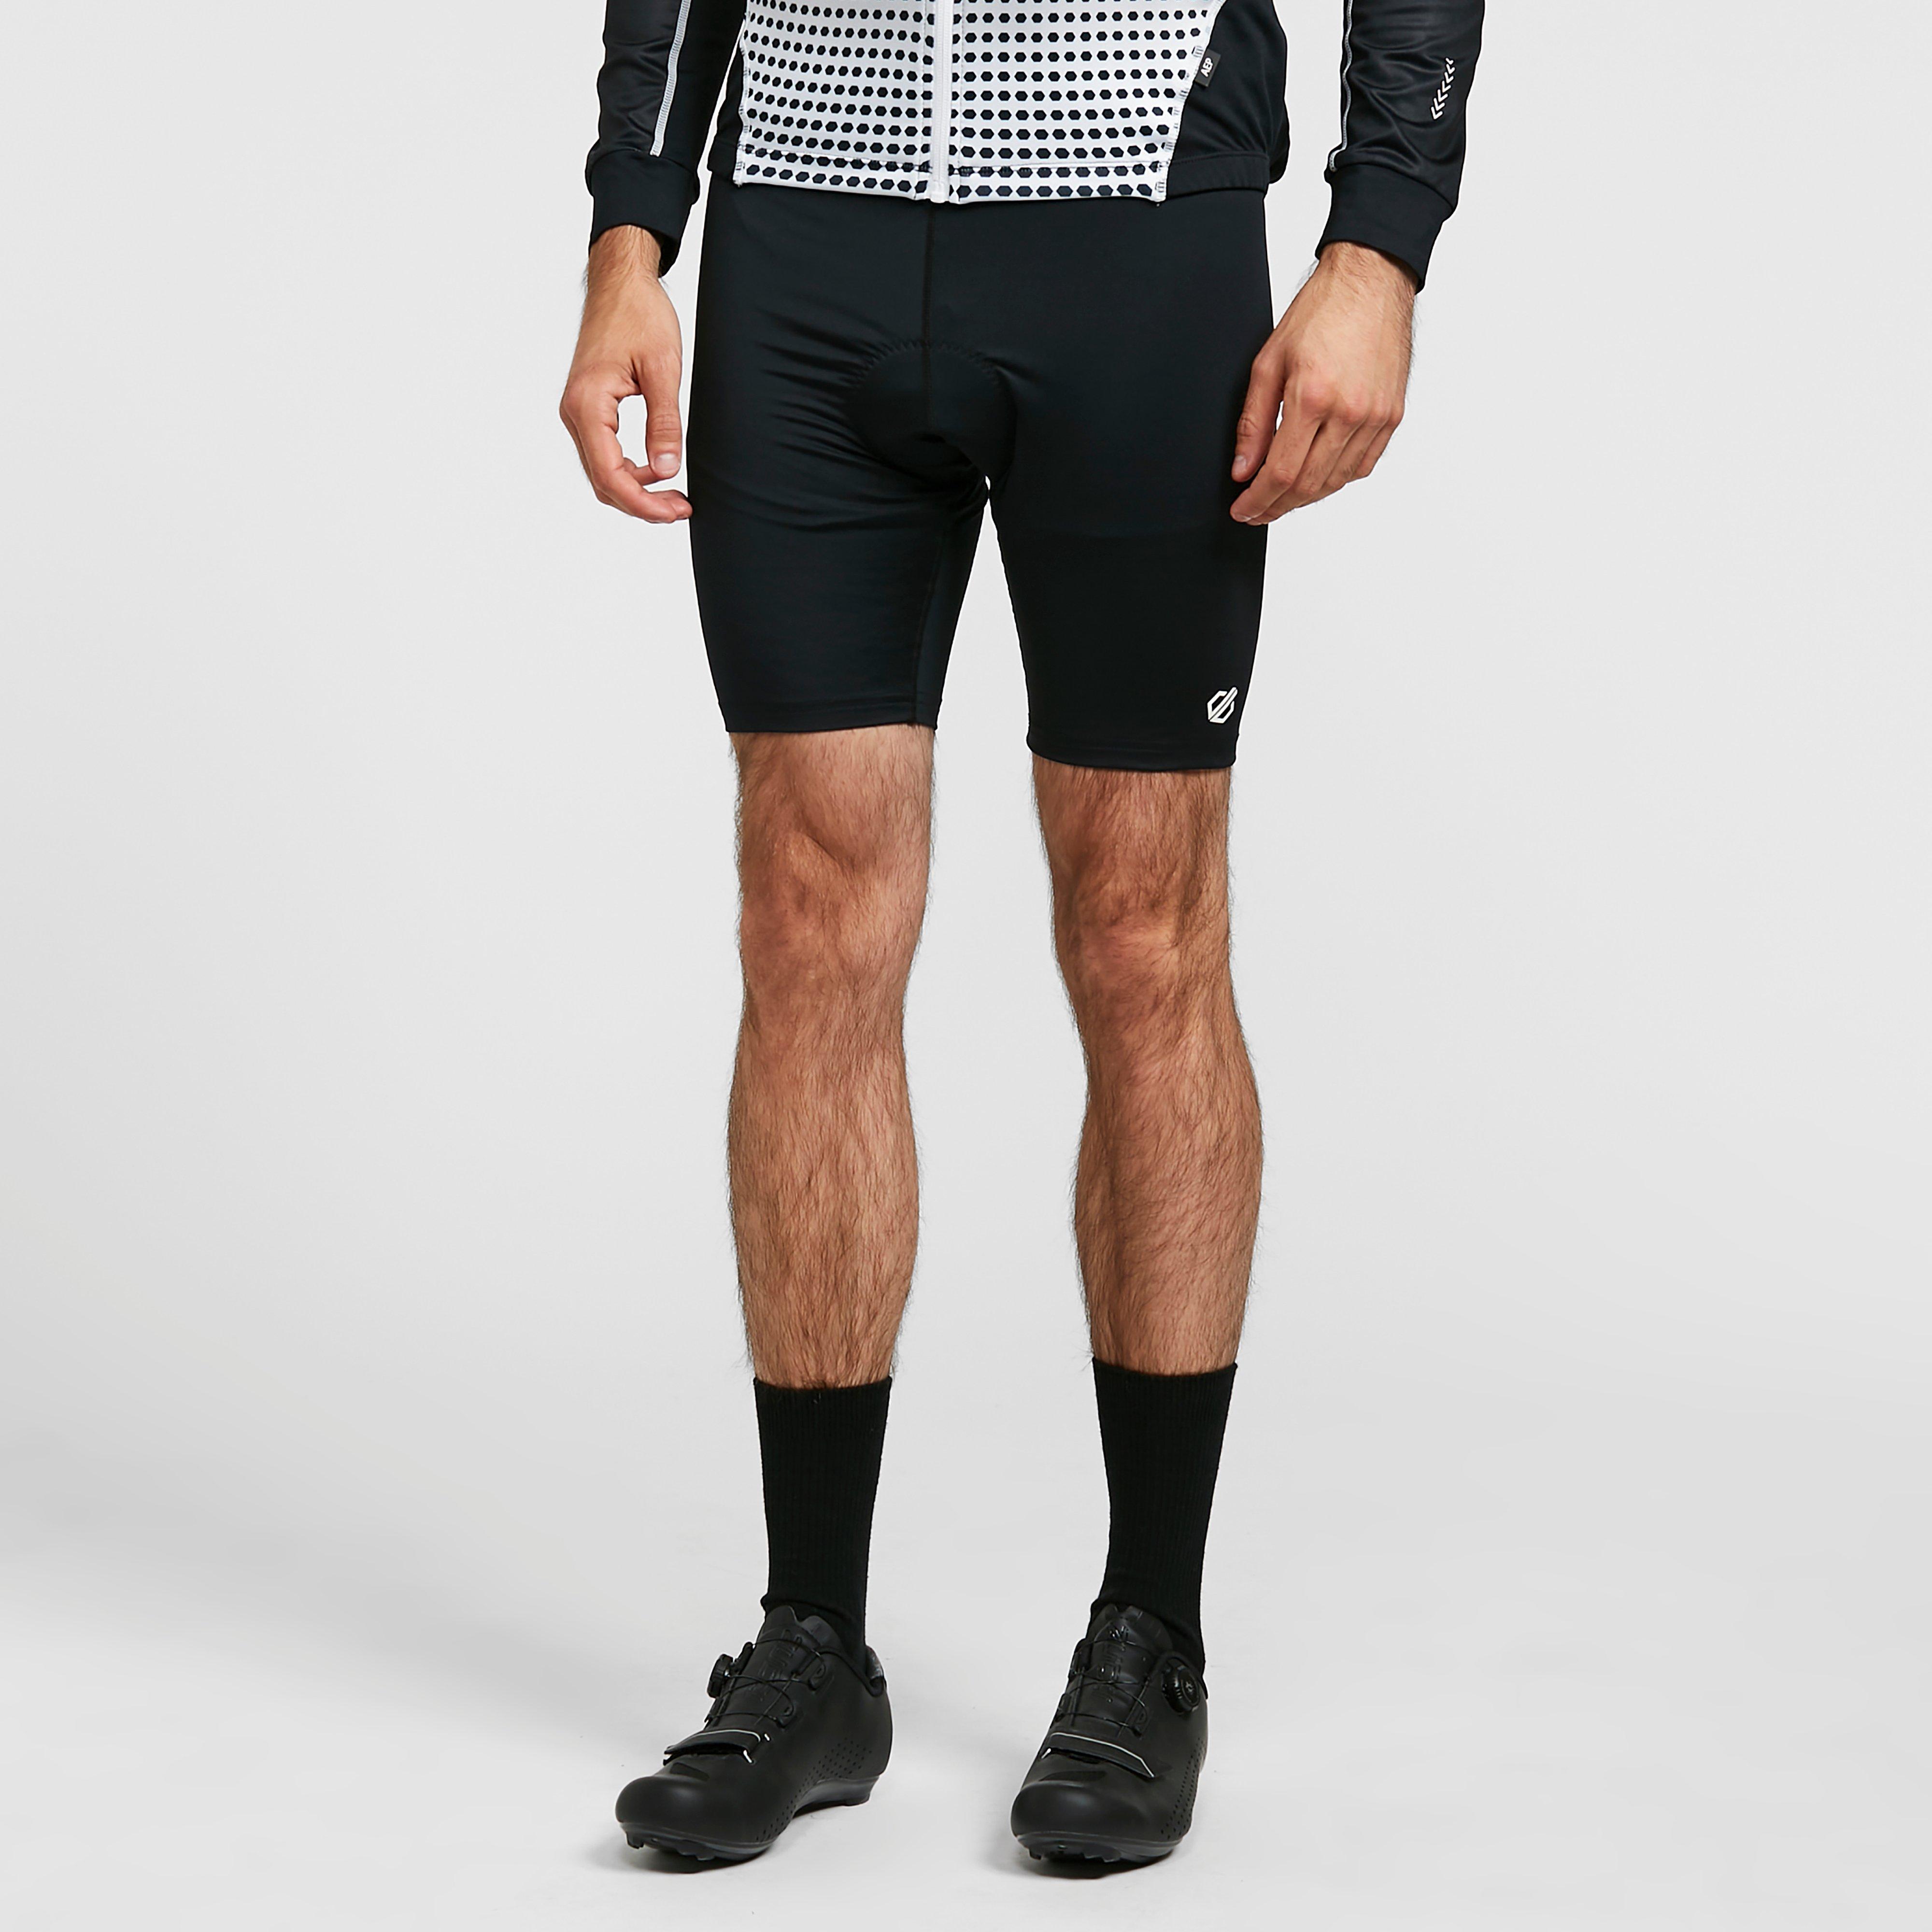 Dare 2b Mens Basic Padded Cycling Shorts - Black/black  Black/black